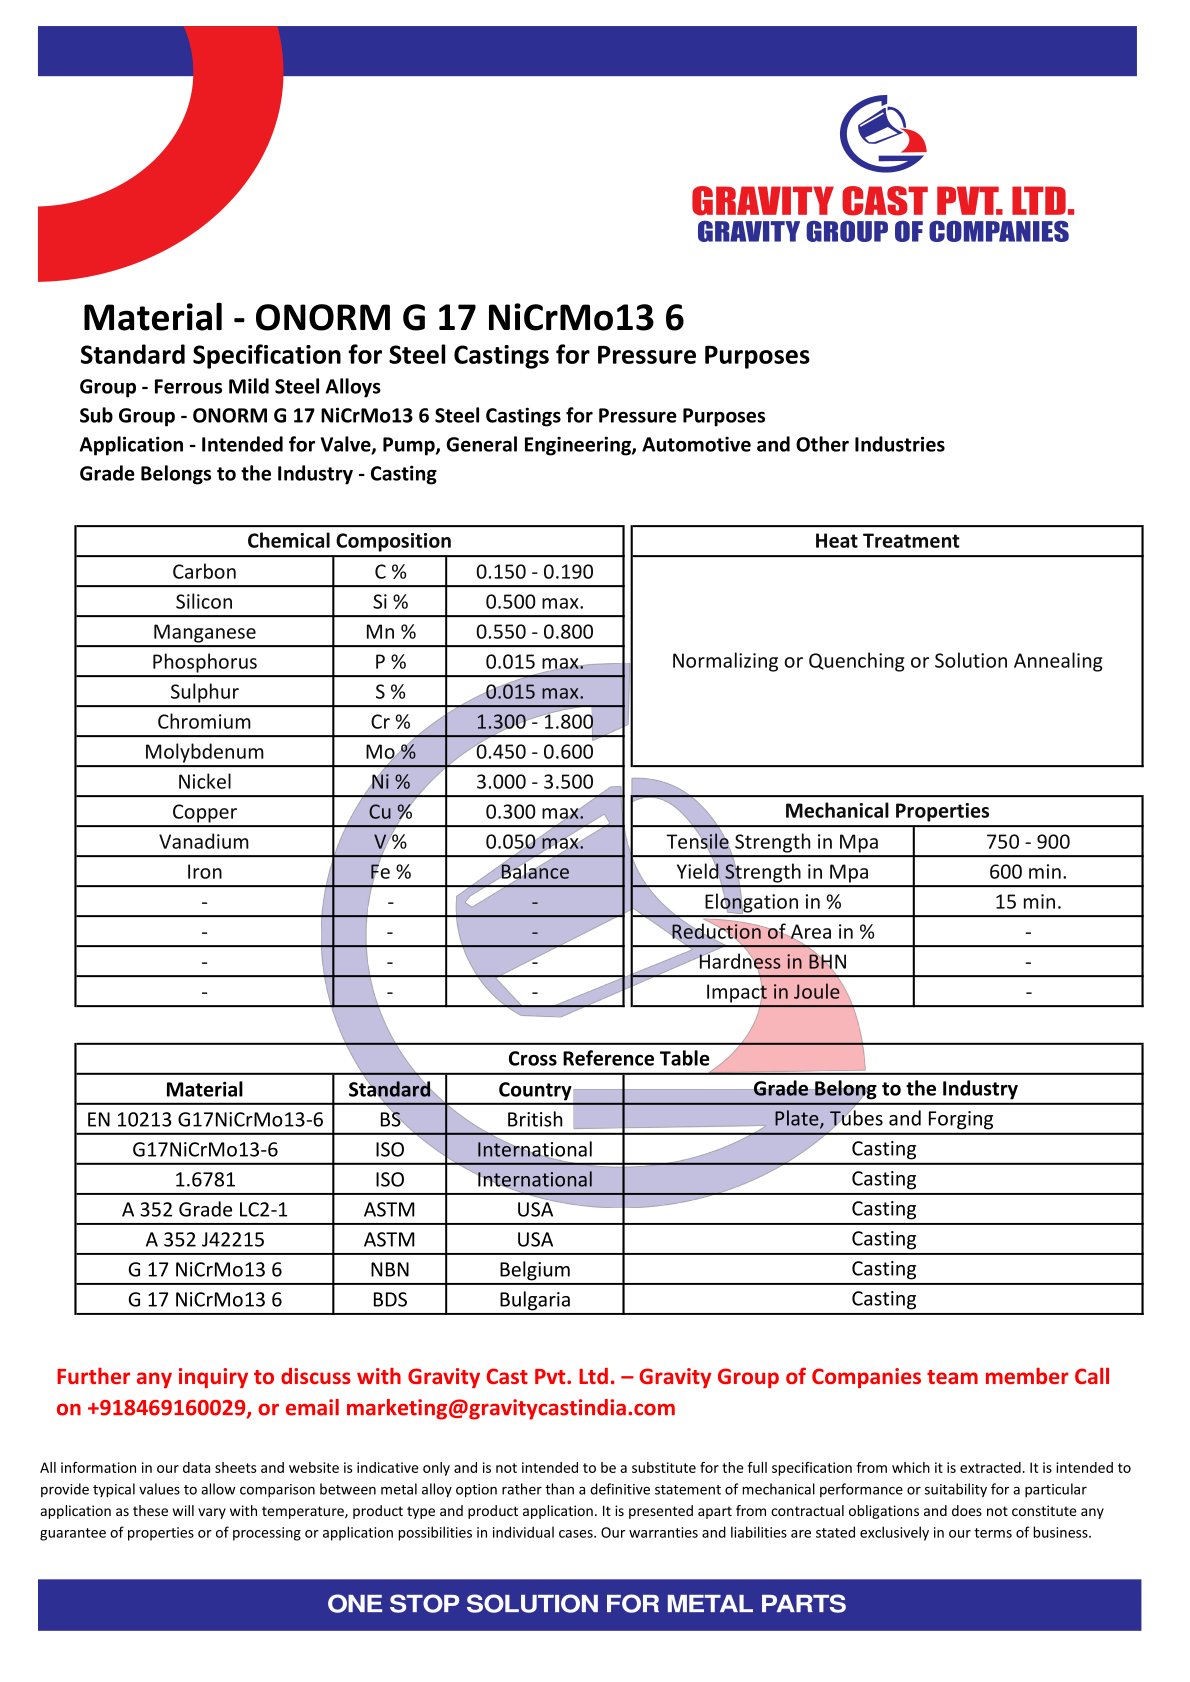 ONORM G 17 NiCrMo13 6.pdf